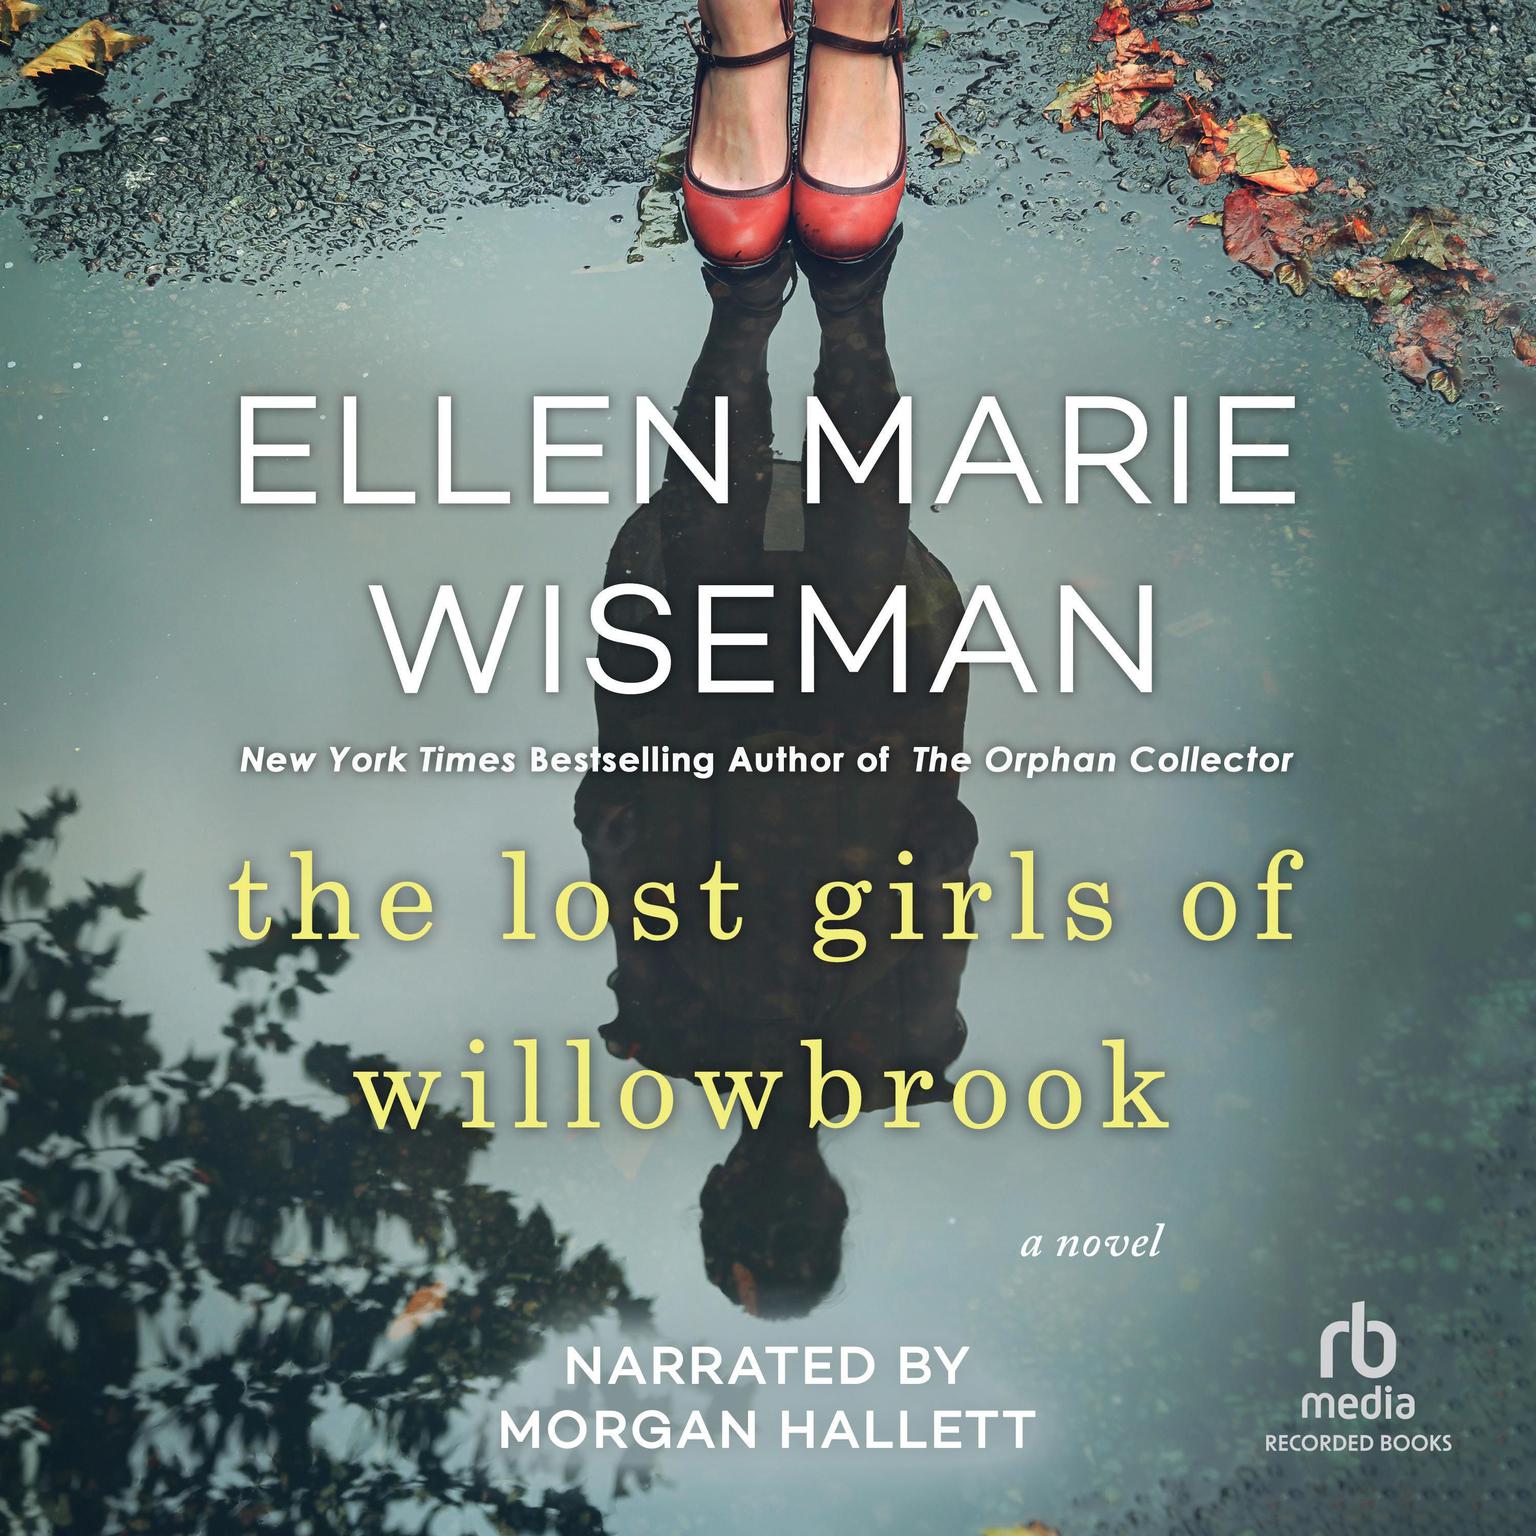 The Lost Girls of Willowbrook Audiobook, by Ellen Marie Wiseman